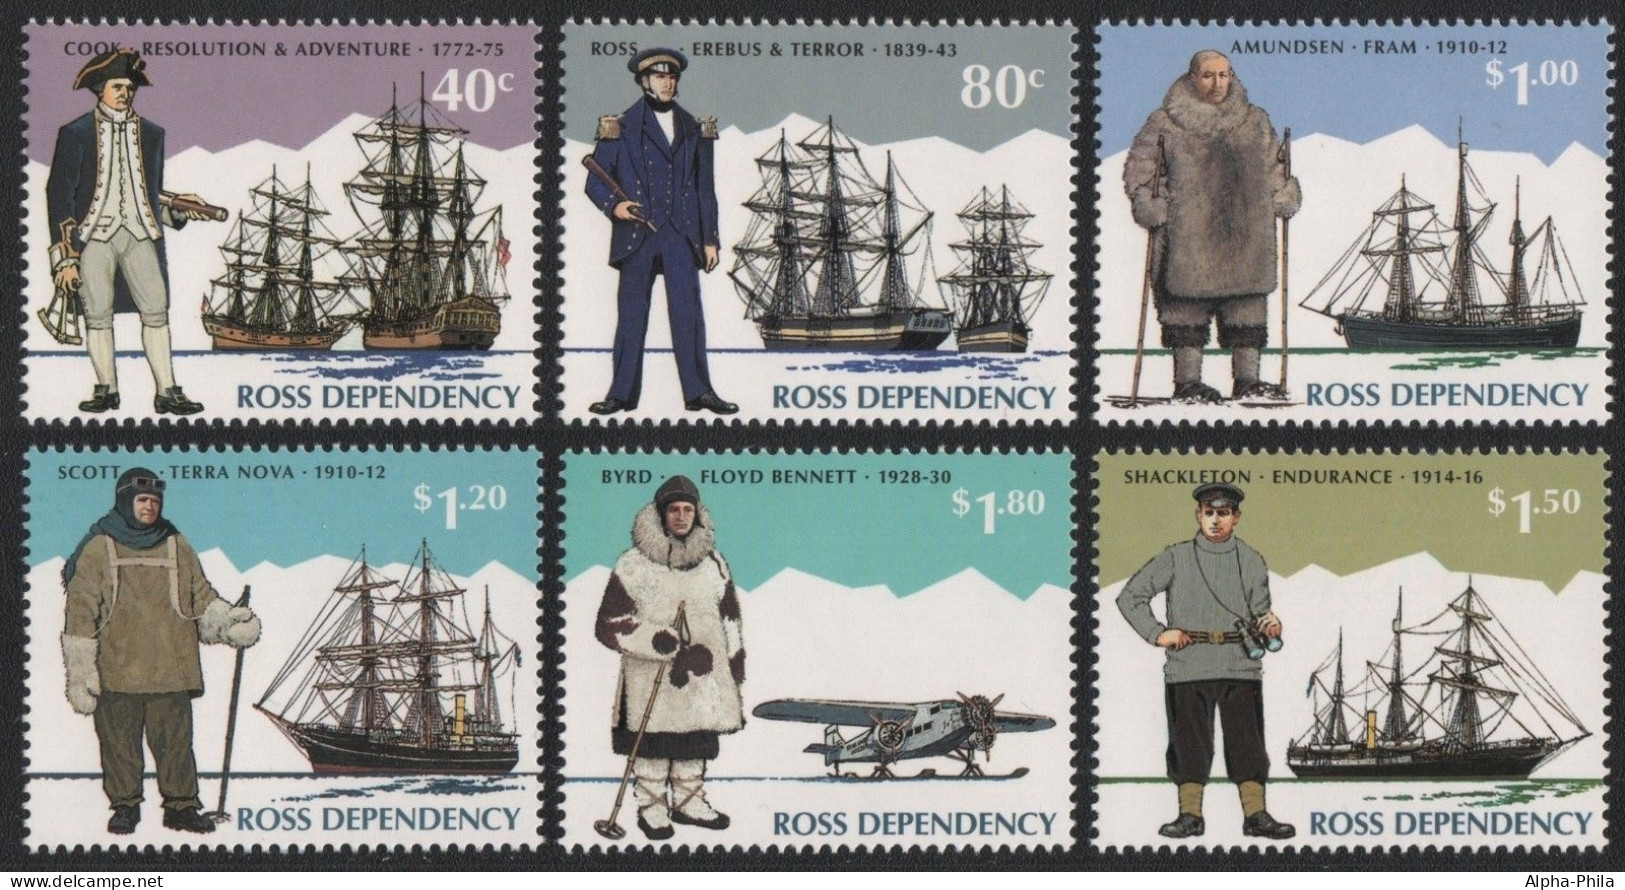 Ross-Gebiet 1995 - Mi-Nr. 32-37 ** - MNH - Schiffe / Ships - Unused Stamps